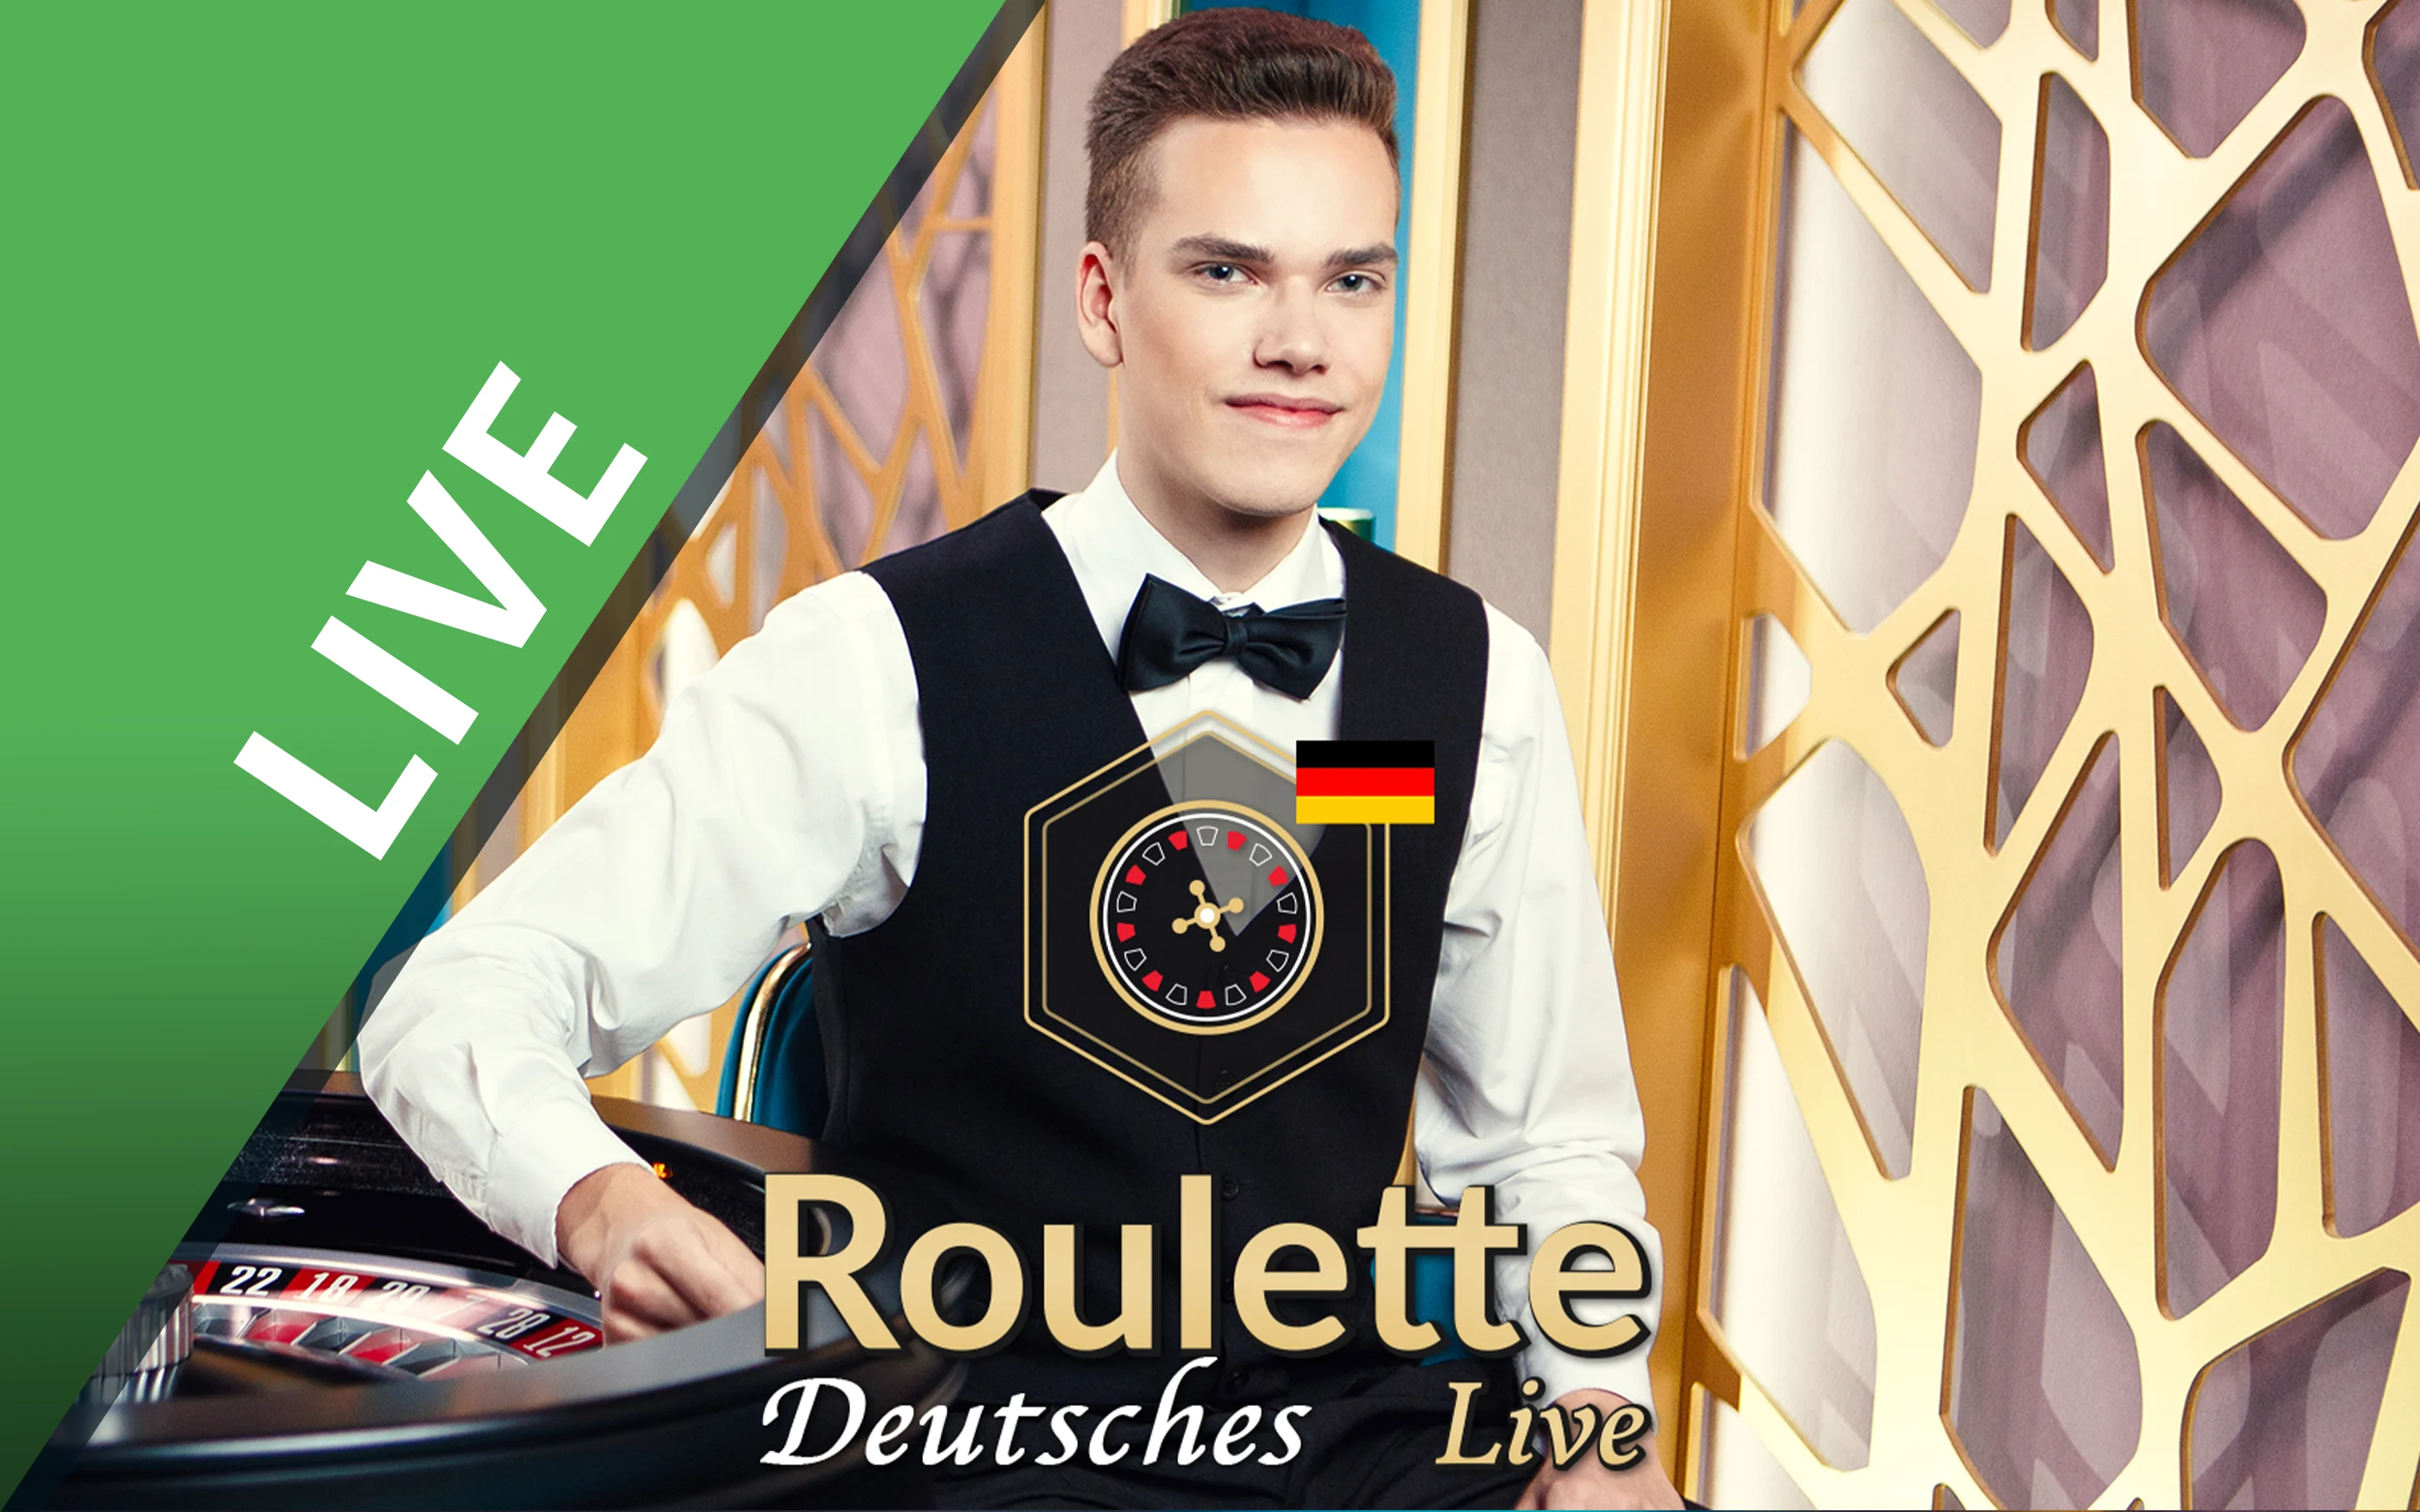 Joacă Deutsches Roulette în cazinoul online Starcasino.be